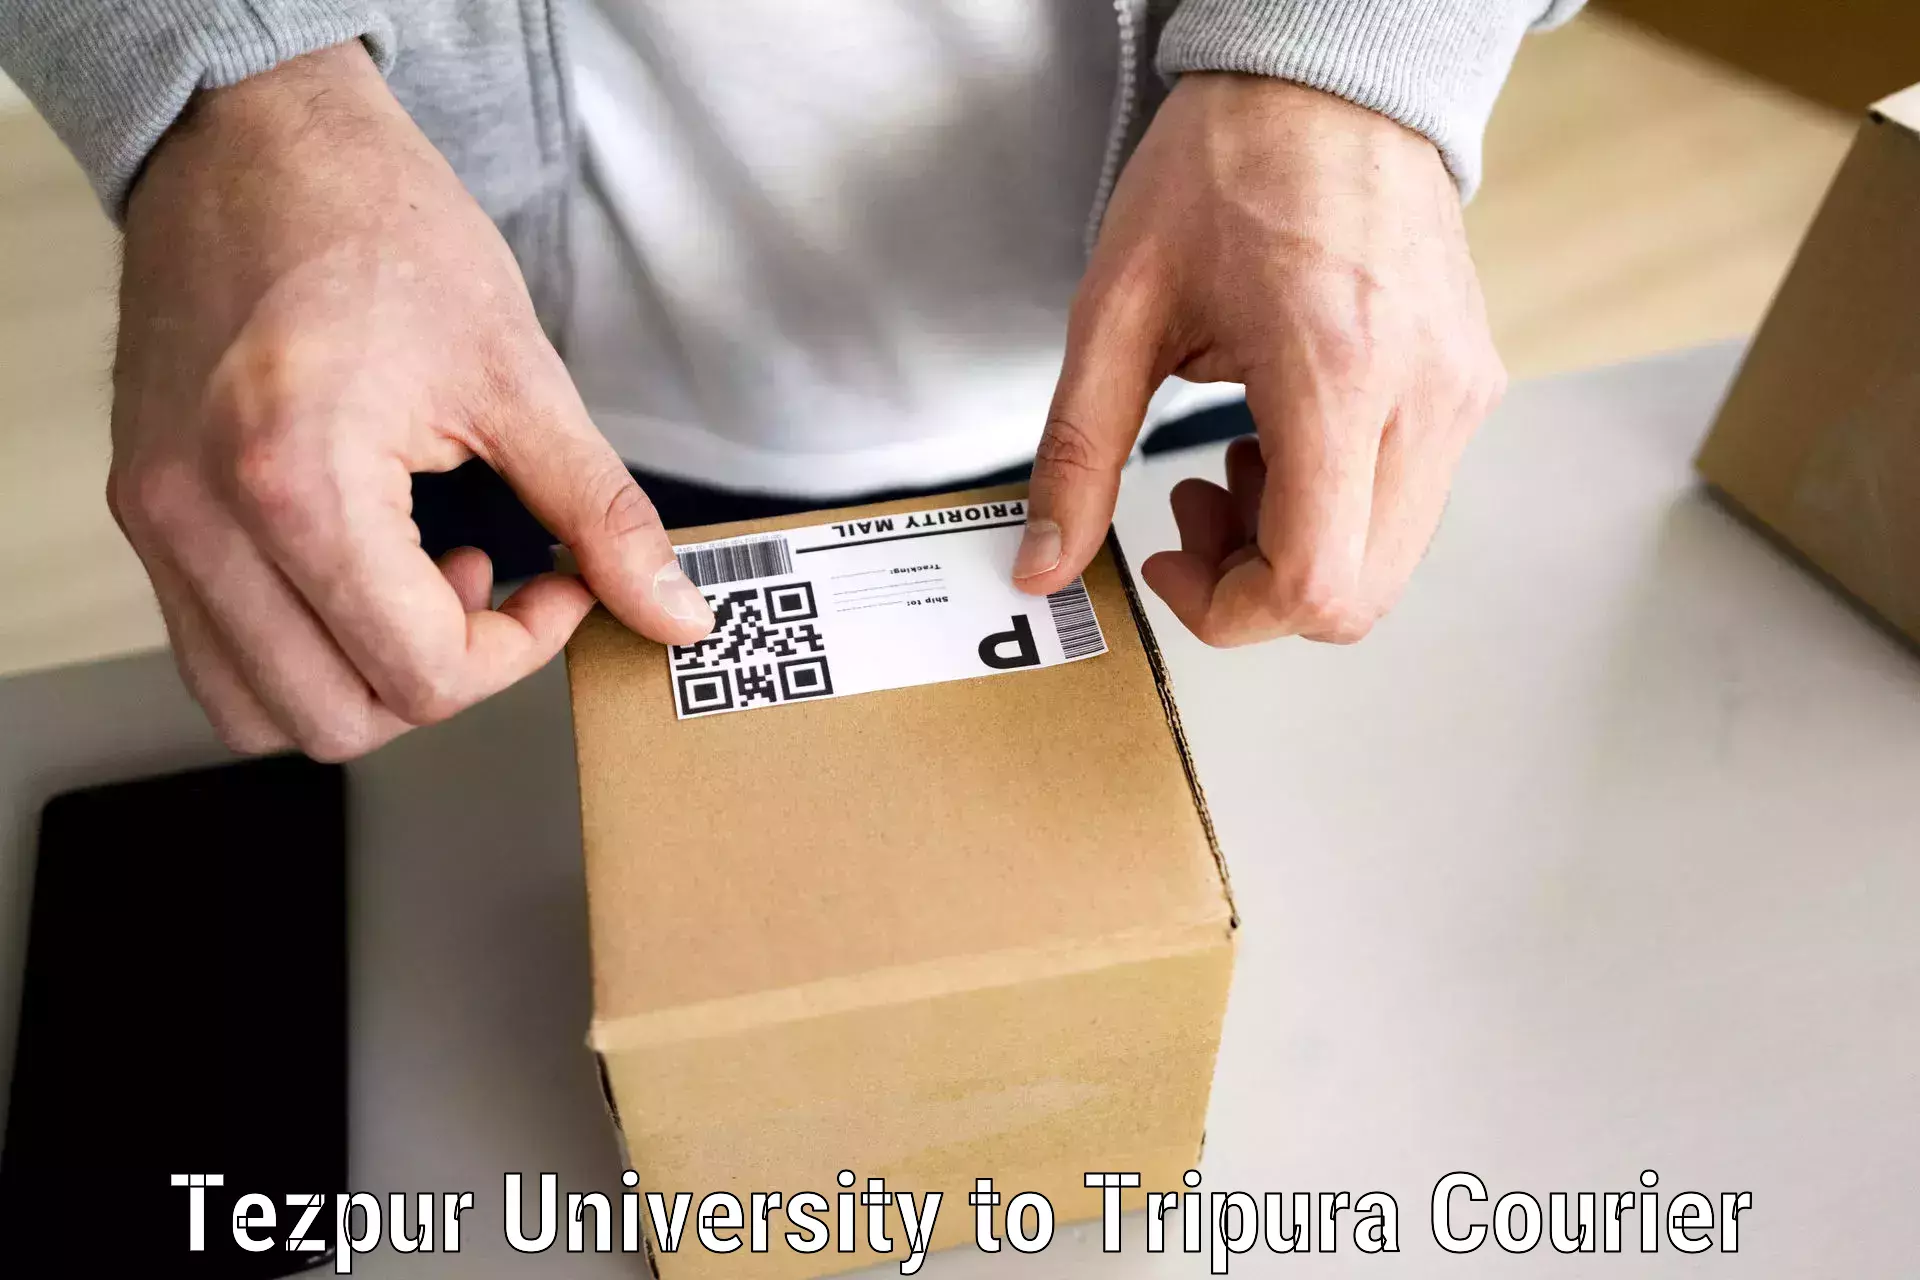 Full-service movers Tezpur University to Agartala